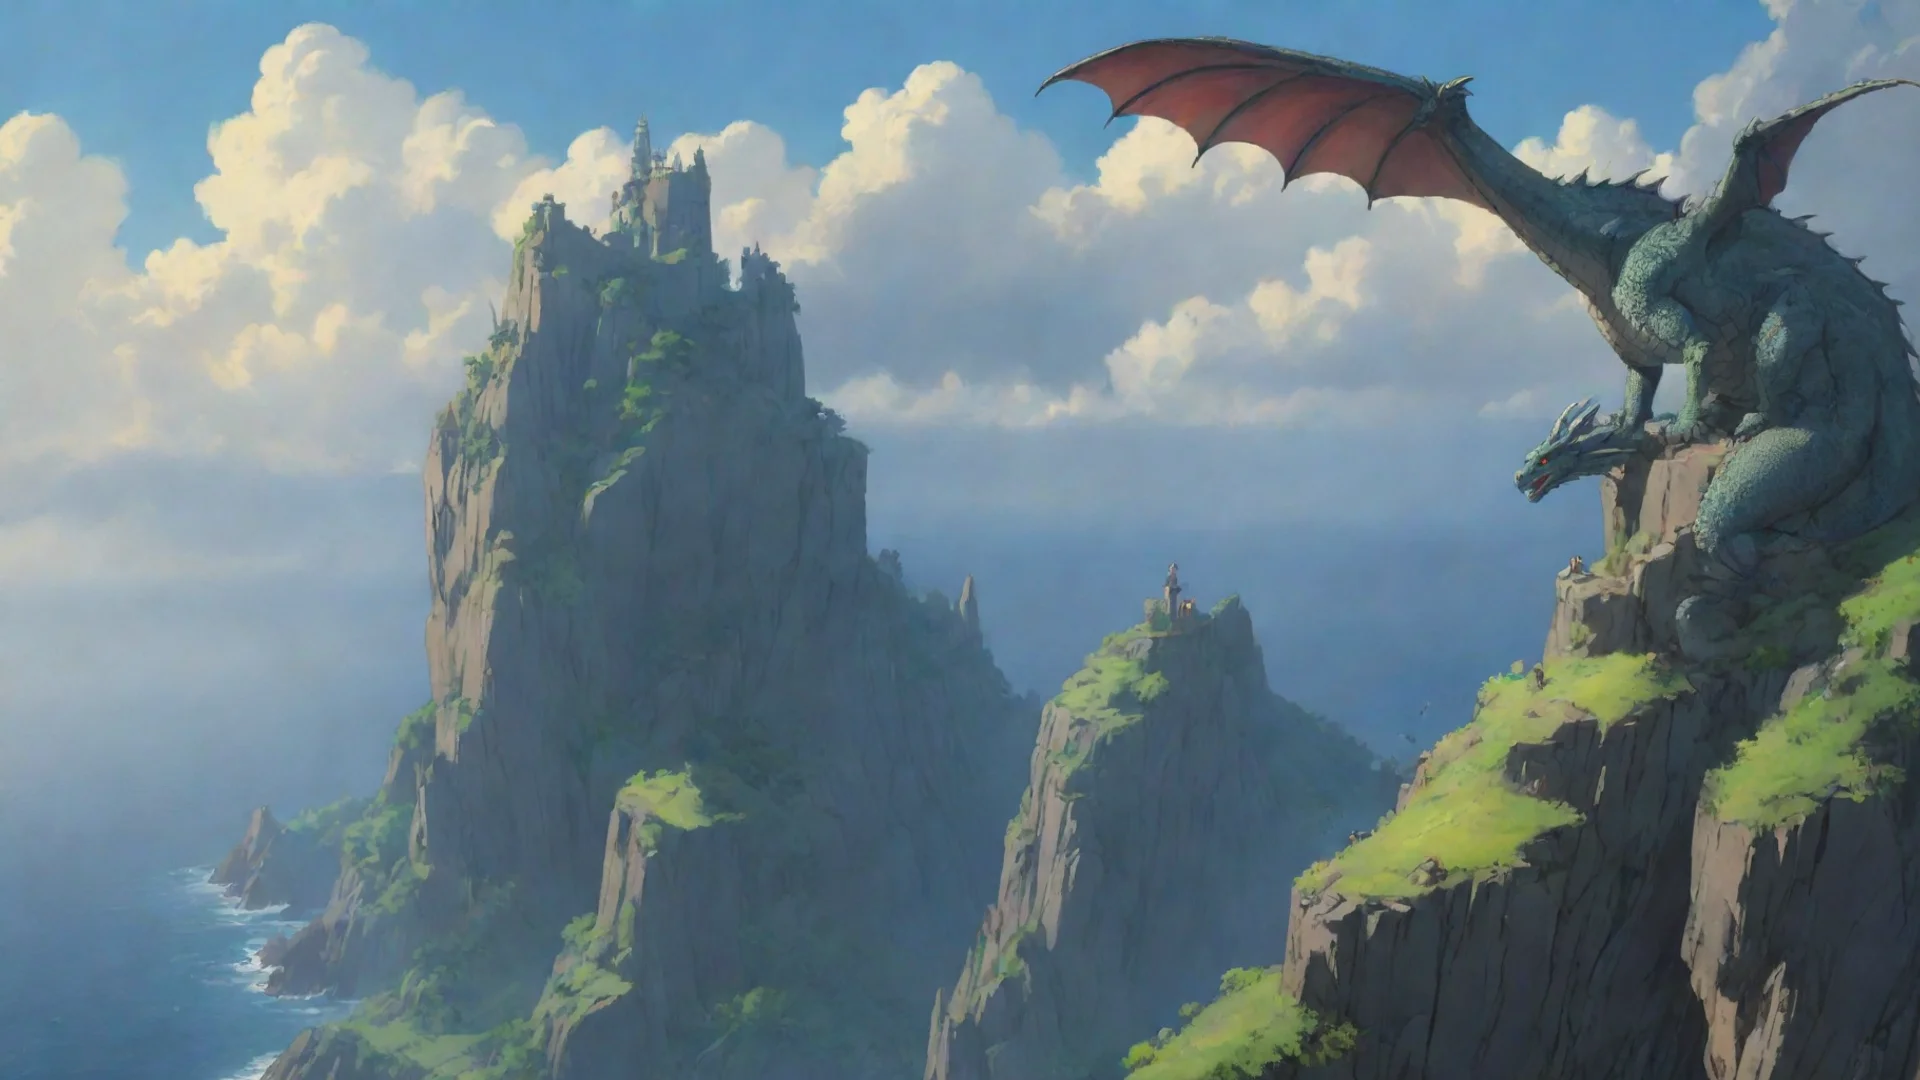 trending amazing fantasy environment dragon on cliff studio ghibli miazaki anime best quality artstation still good looking fantastic 1 wide